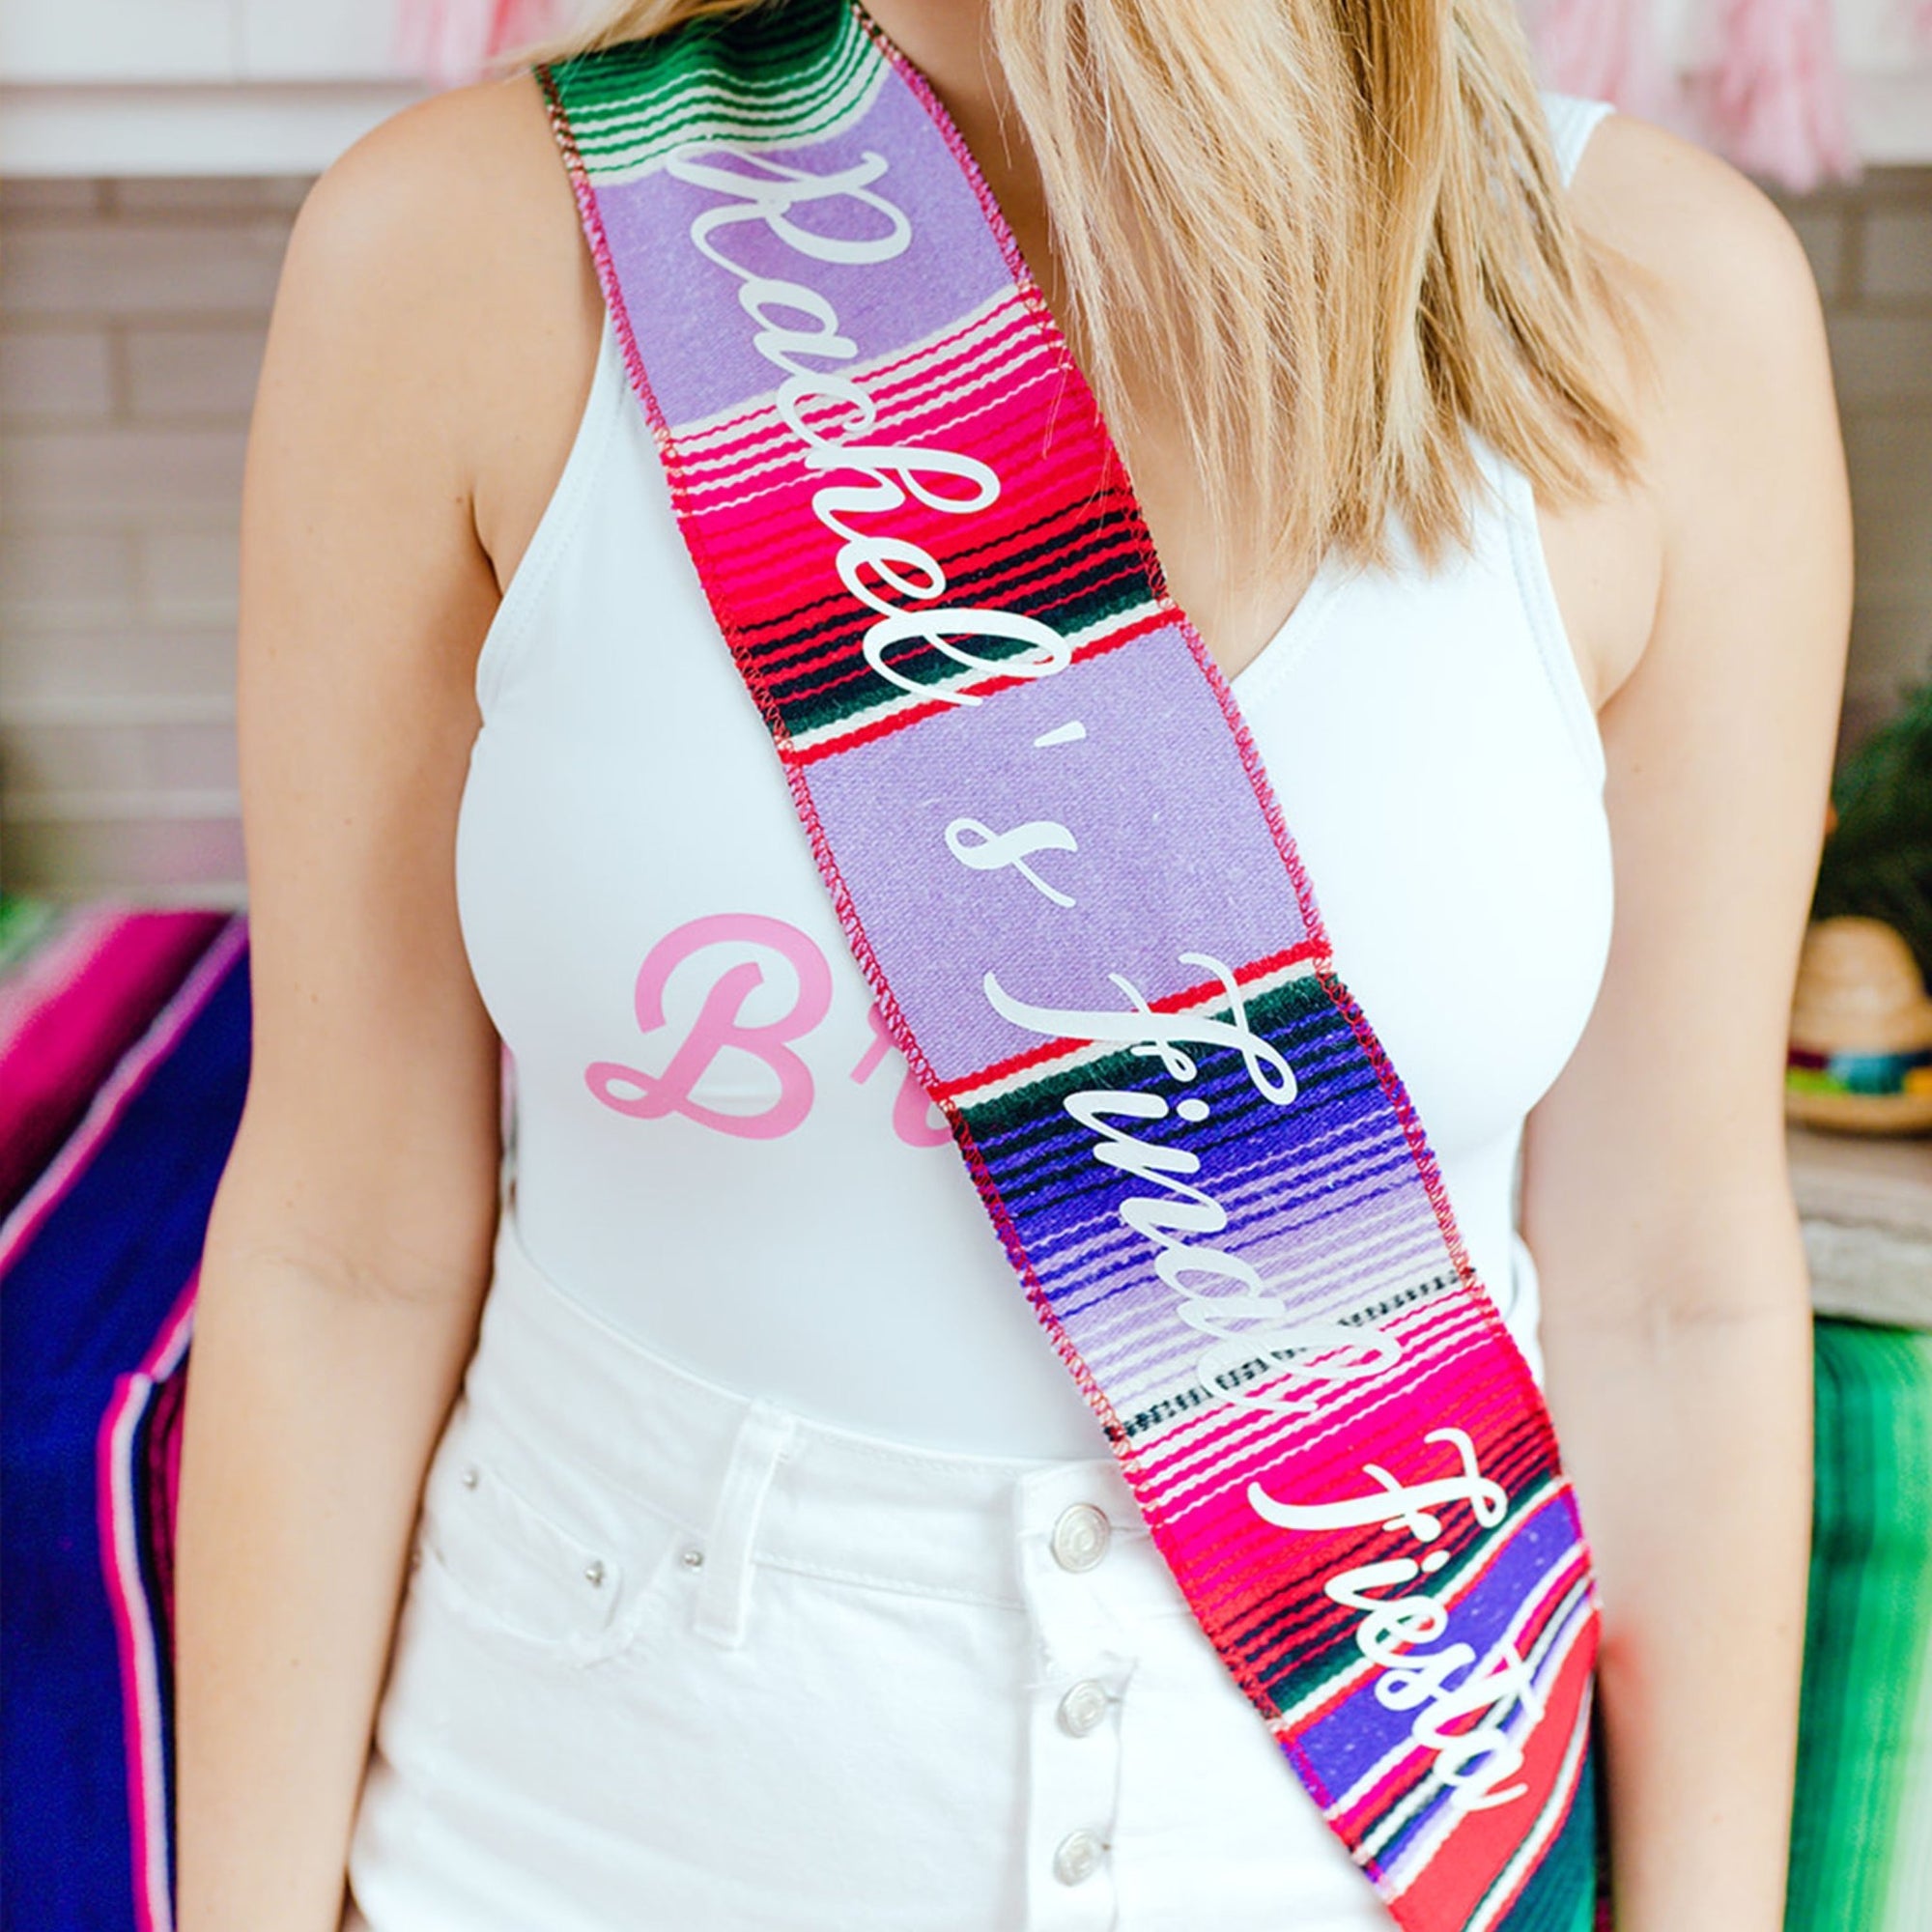 A bride-to-be wears a personalized Final Fiesta serape sash